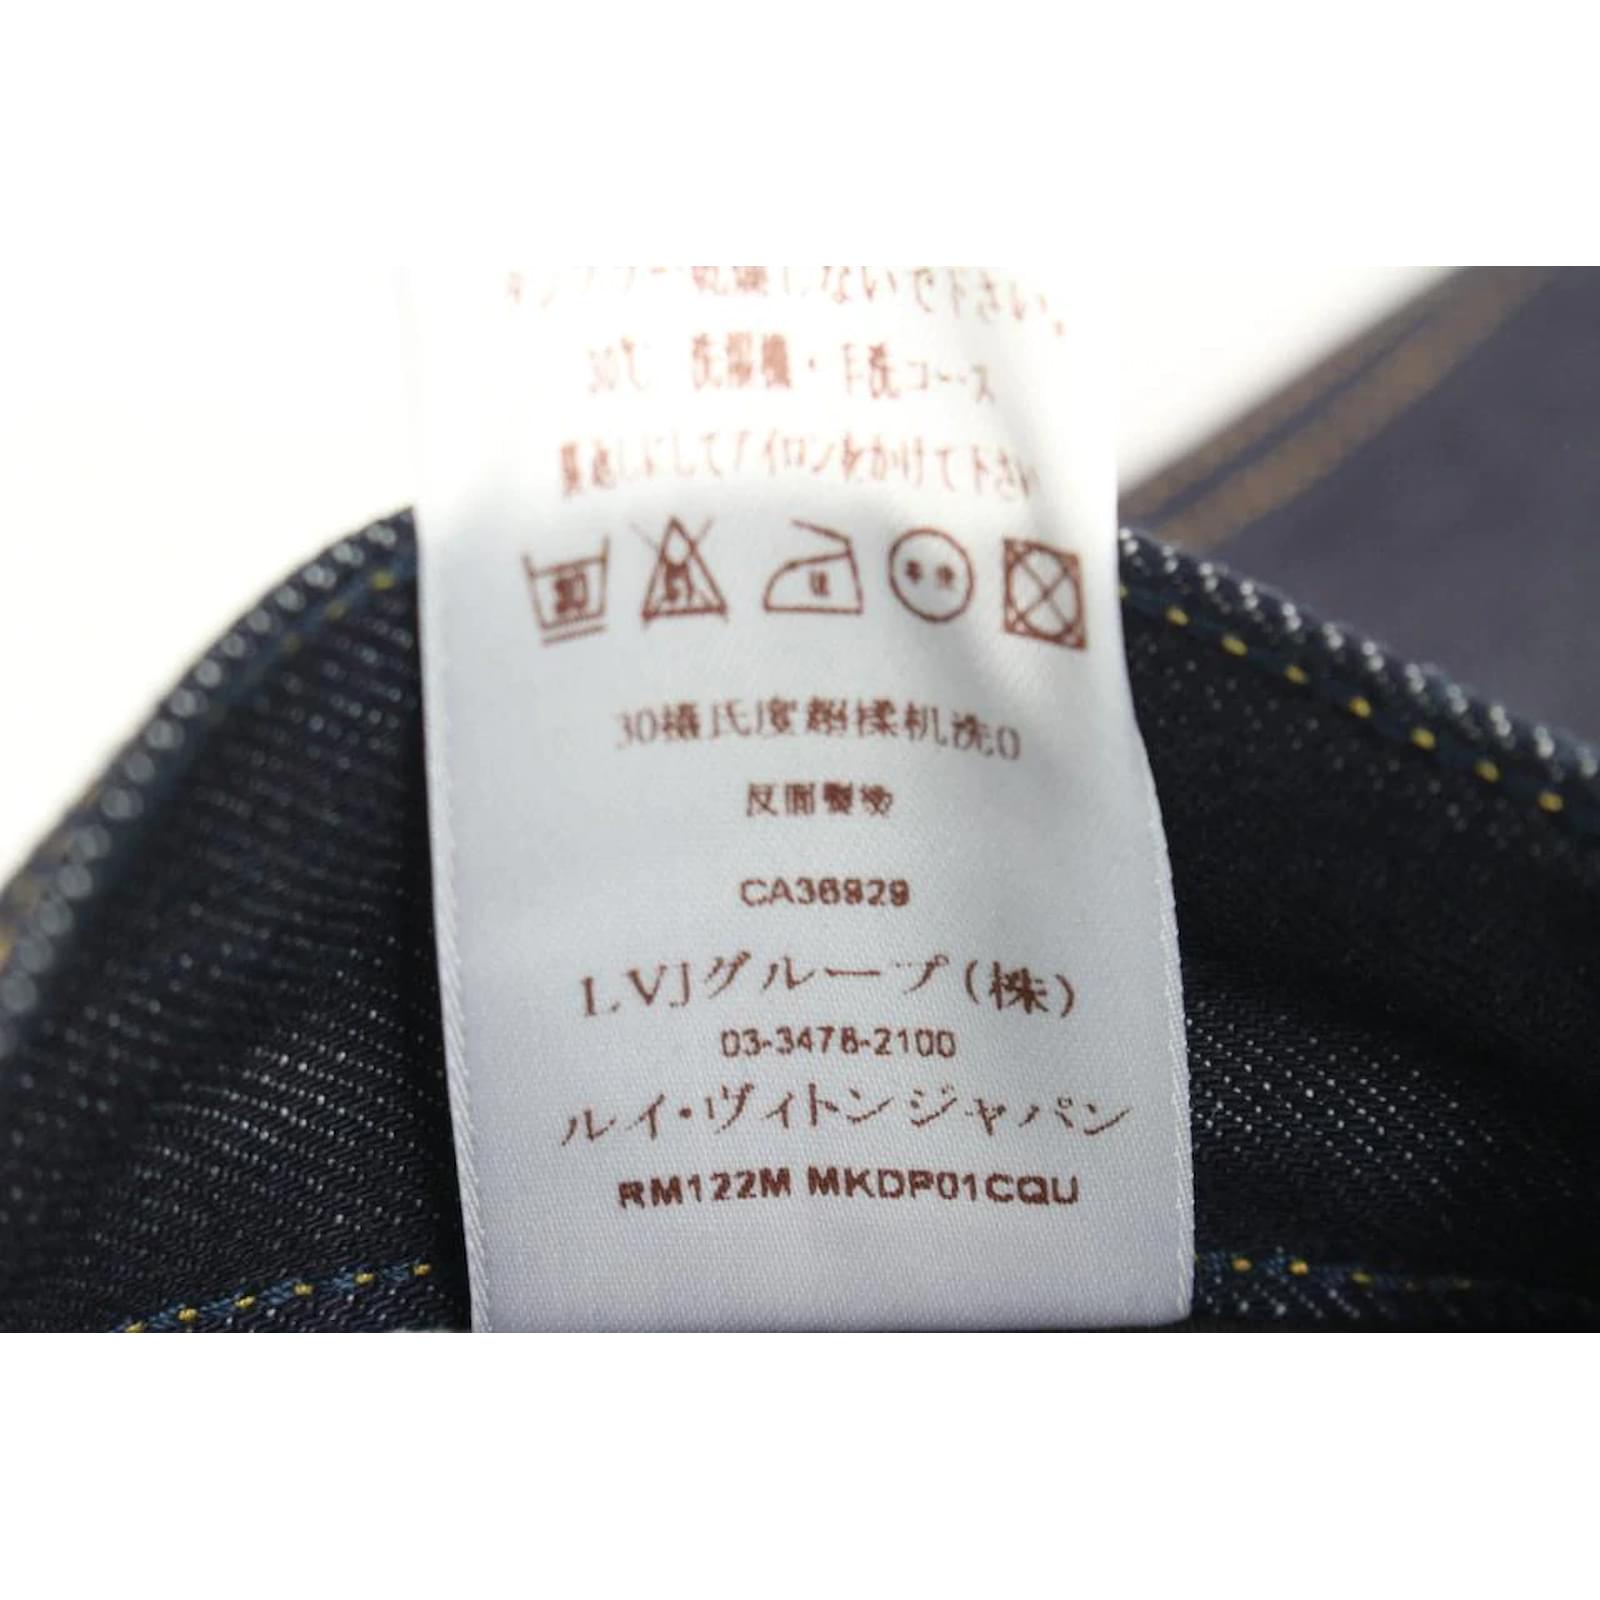 Louis Vuitton Men's LV Fleur Logo Jeans